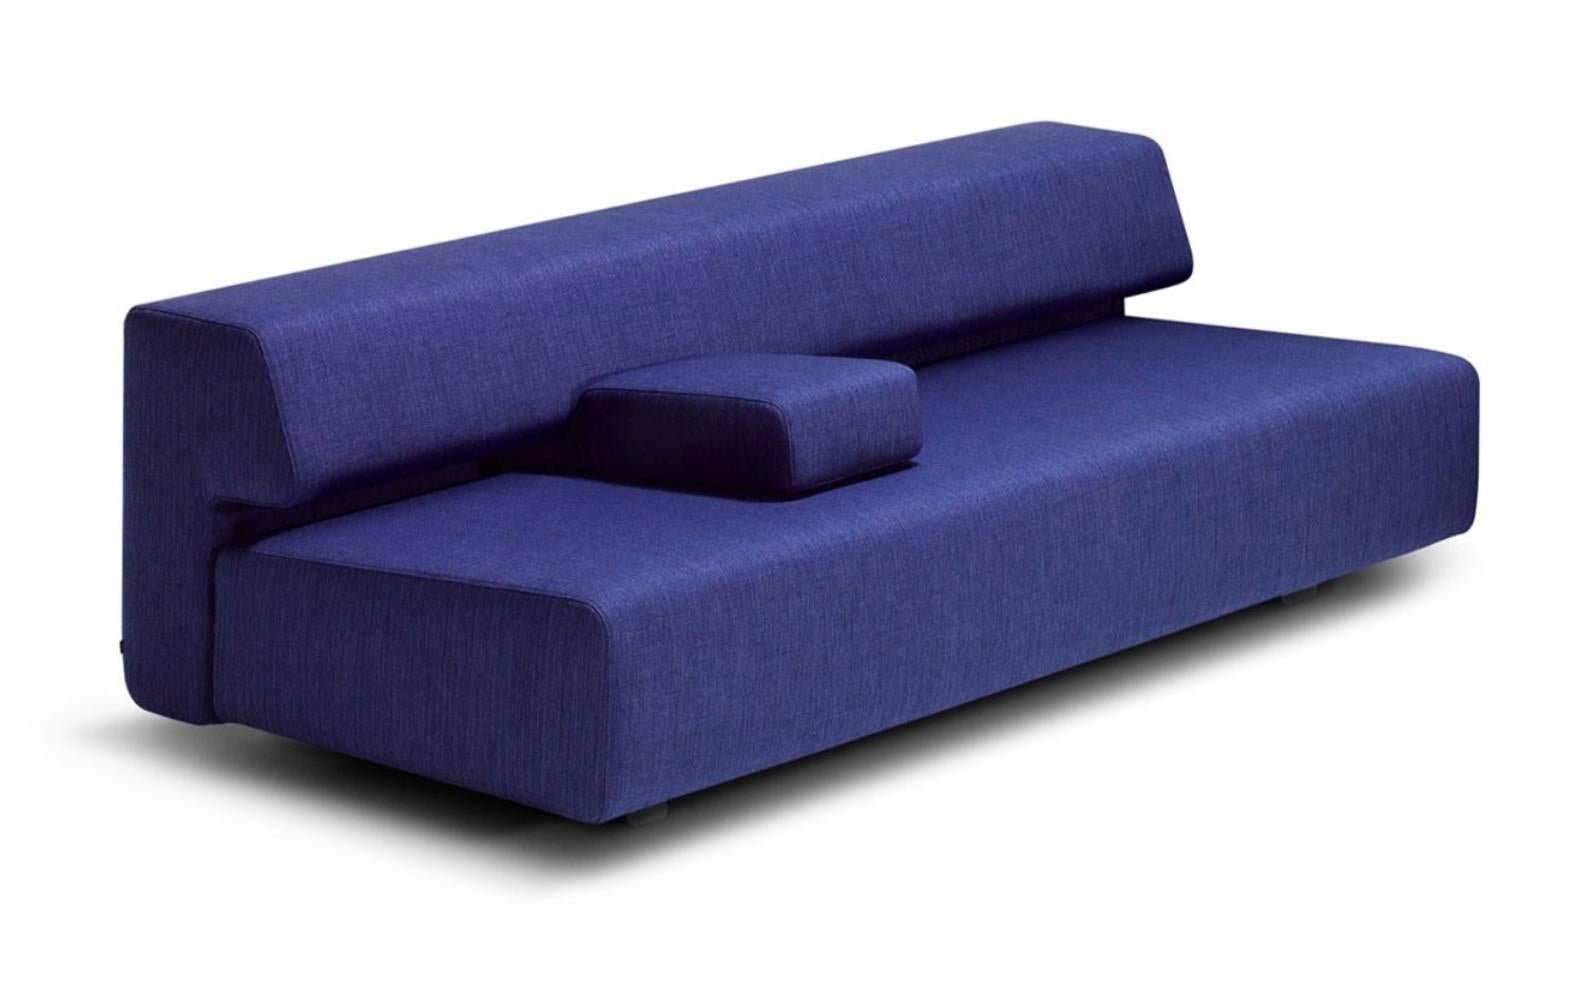 Modern COR Cosma Sleeper Sofa in Fabric or Leather For Sale